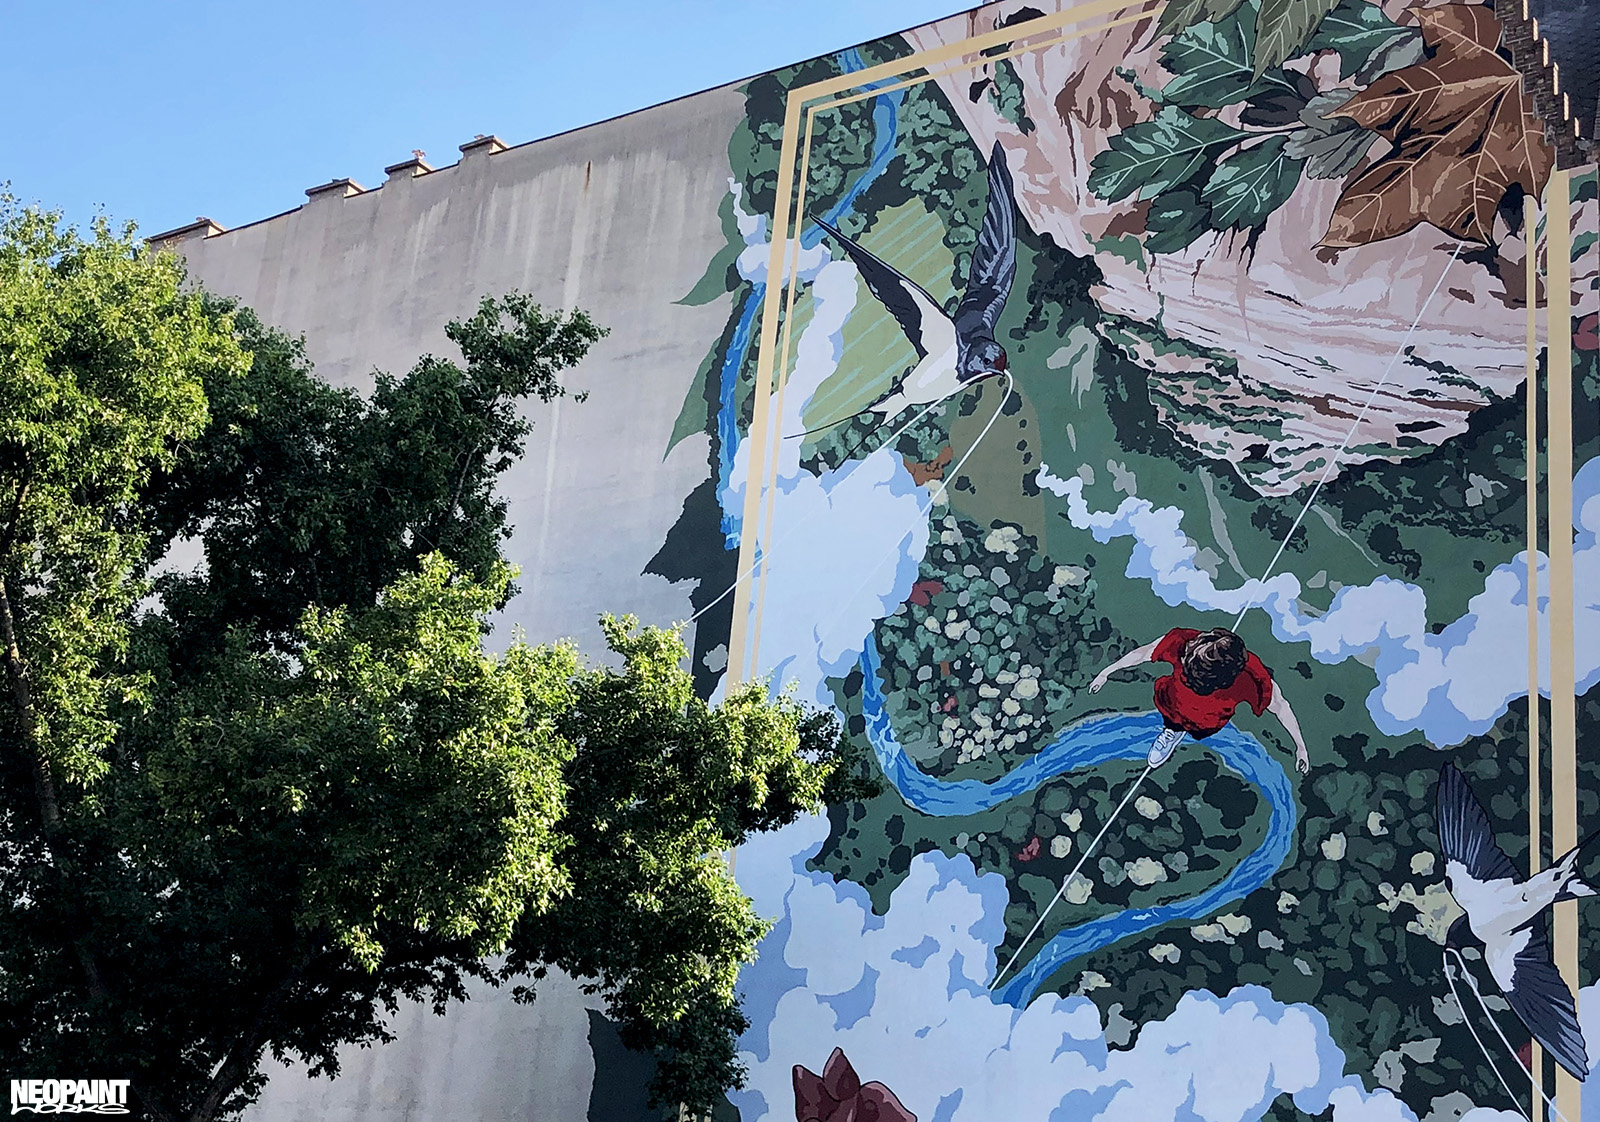 neopaint works - tűzfalfestés - mural painting - converse - cityforest